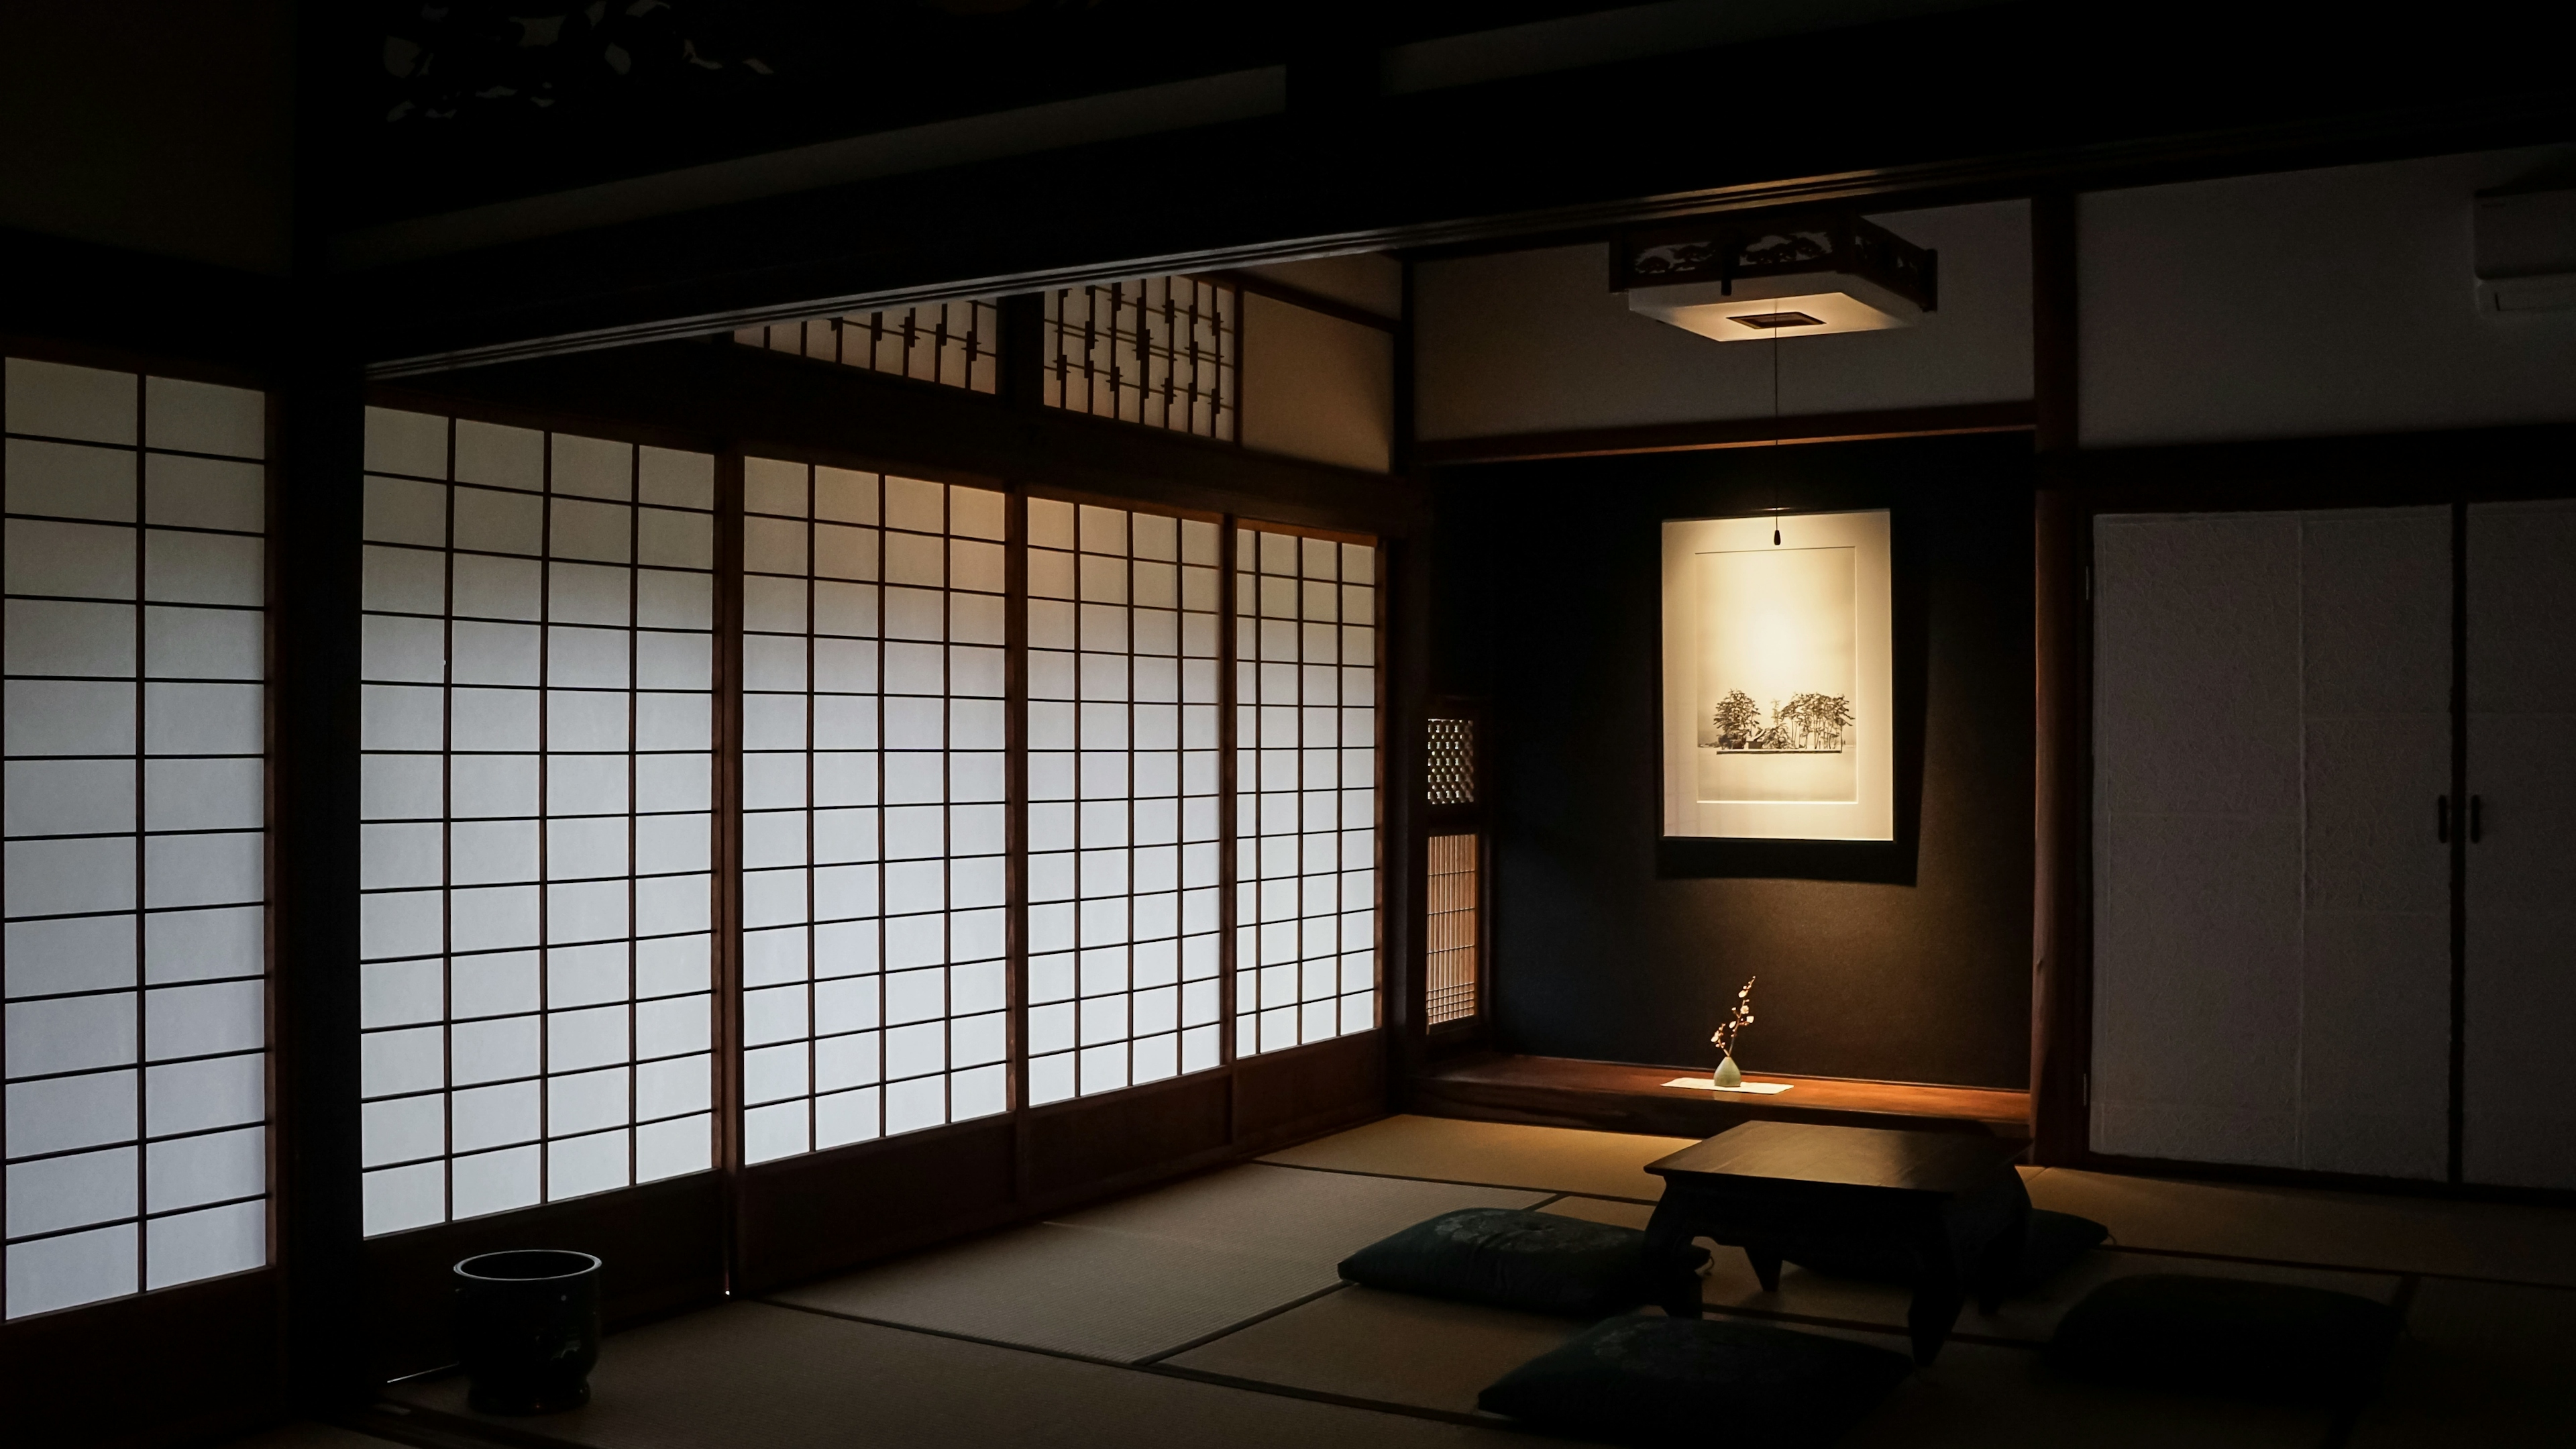 Main room with tatami mats, fusama (sliding screens) and decorative print.